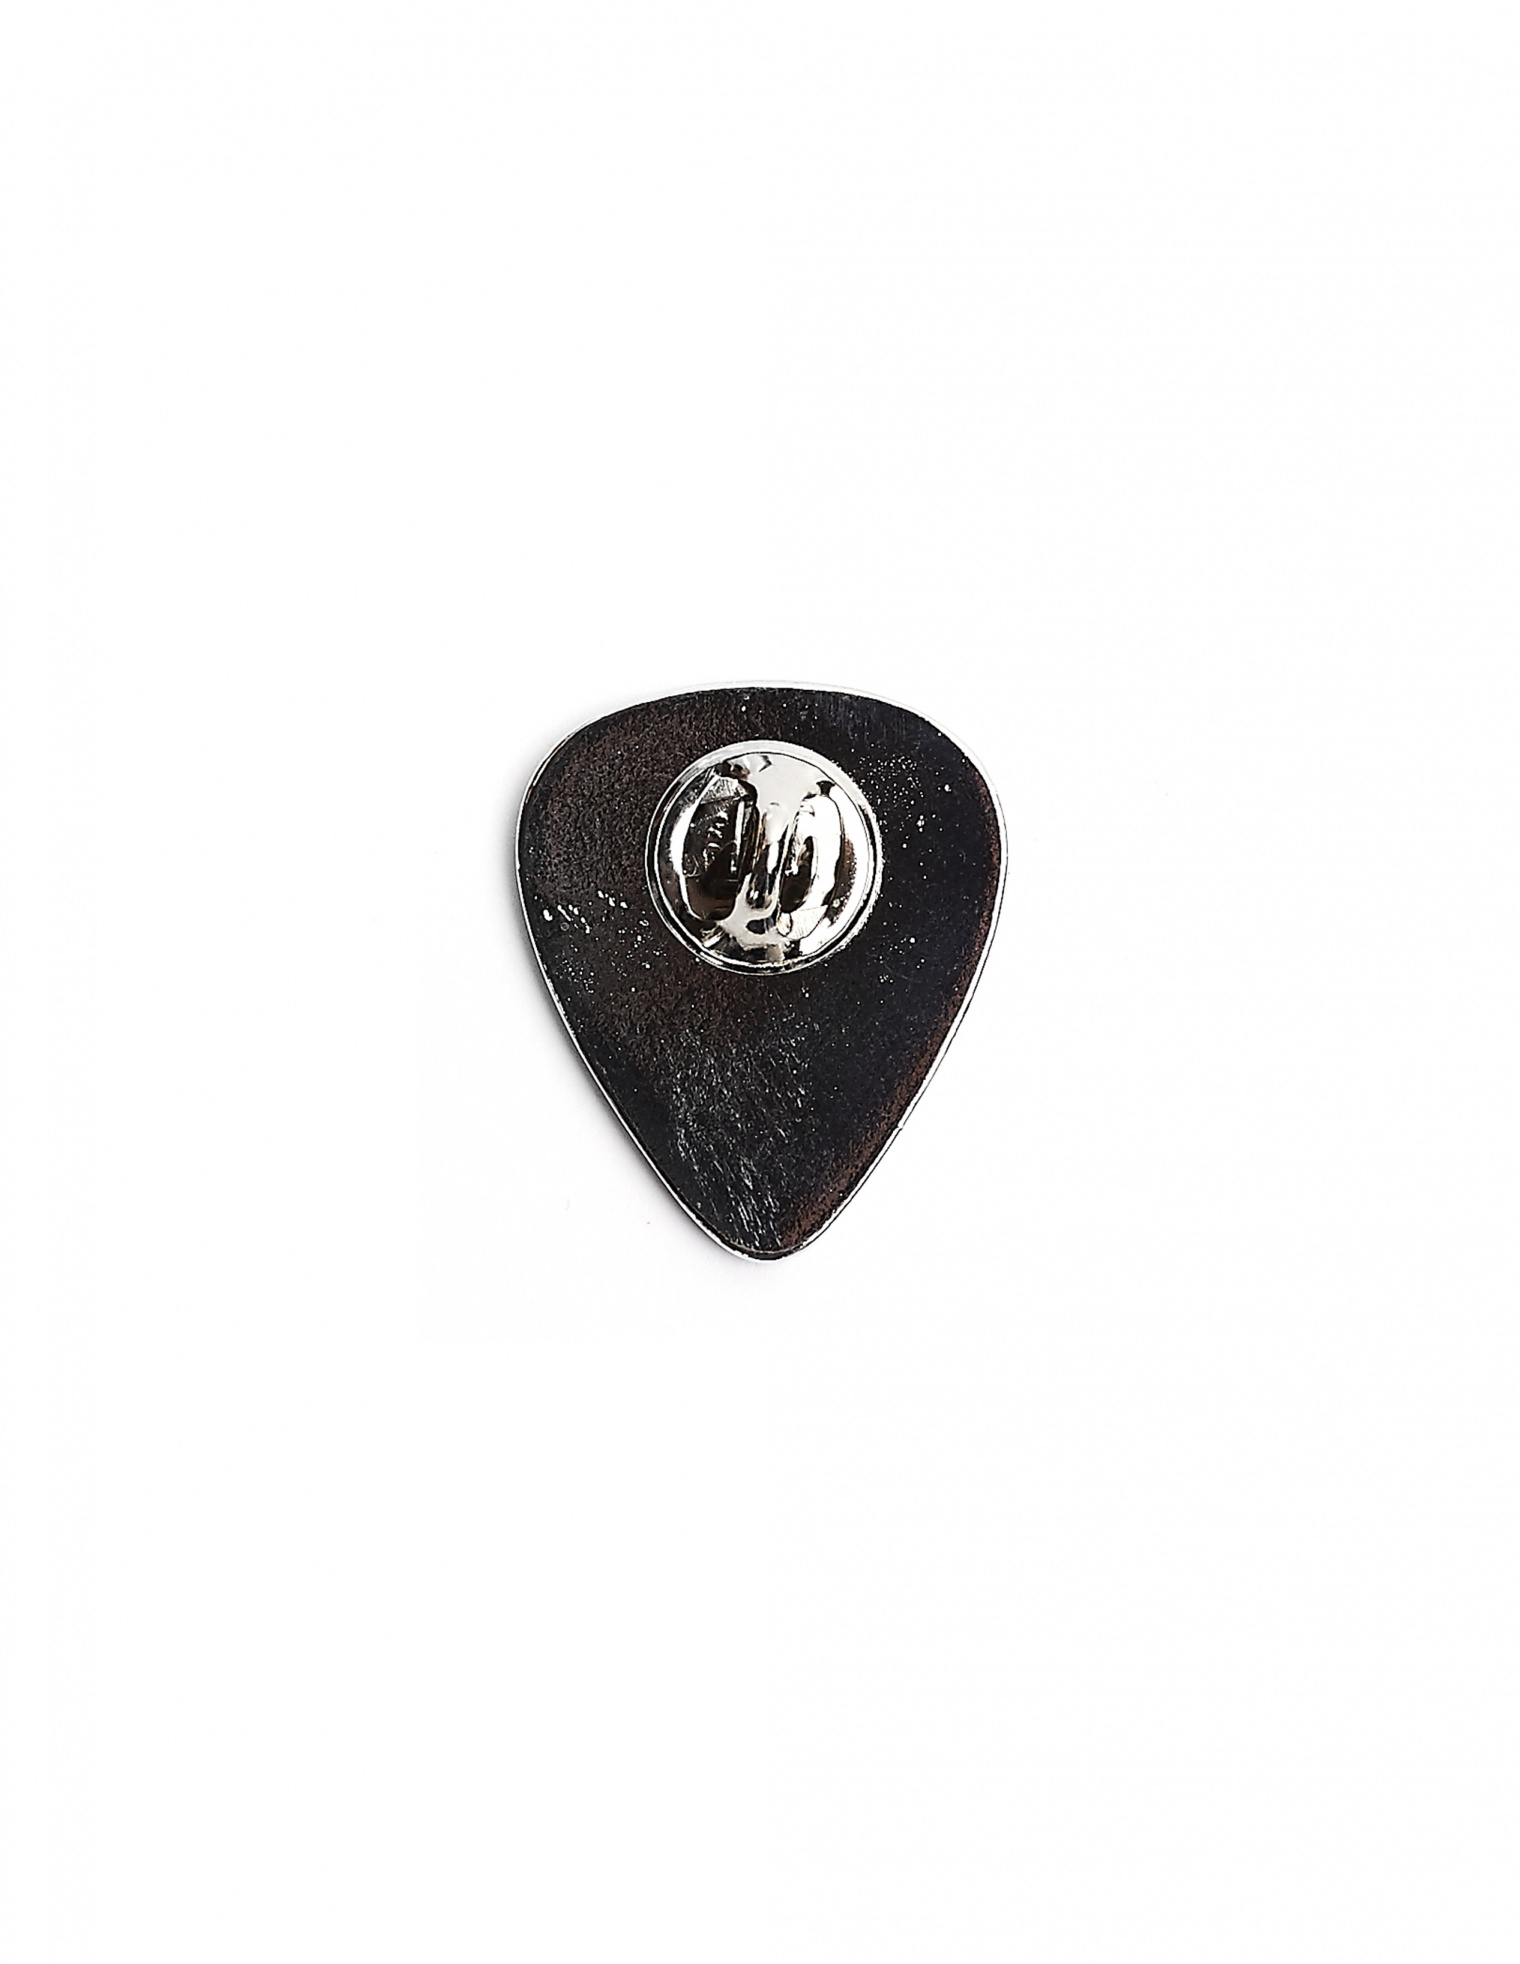 Yohji Yamamoto White Guitar Pick Pin Badge